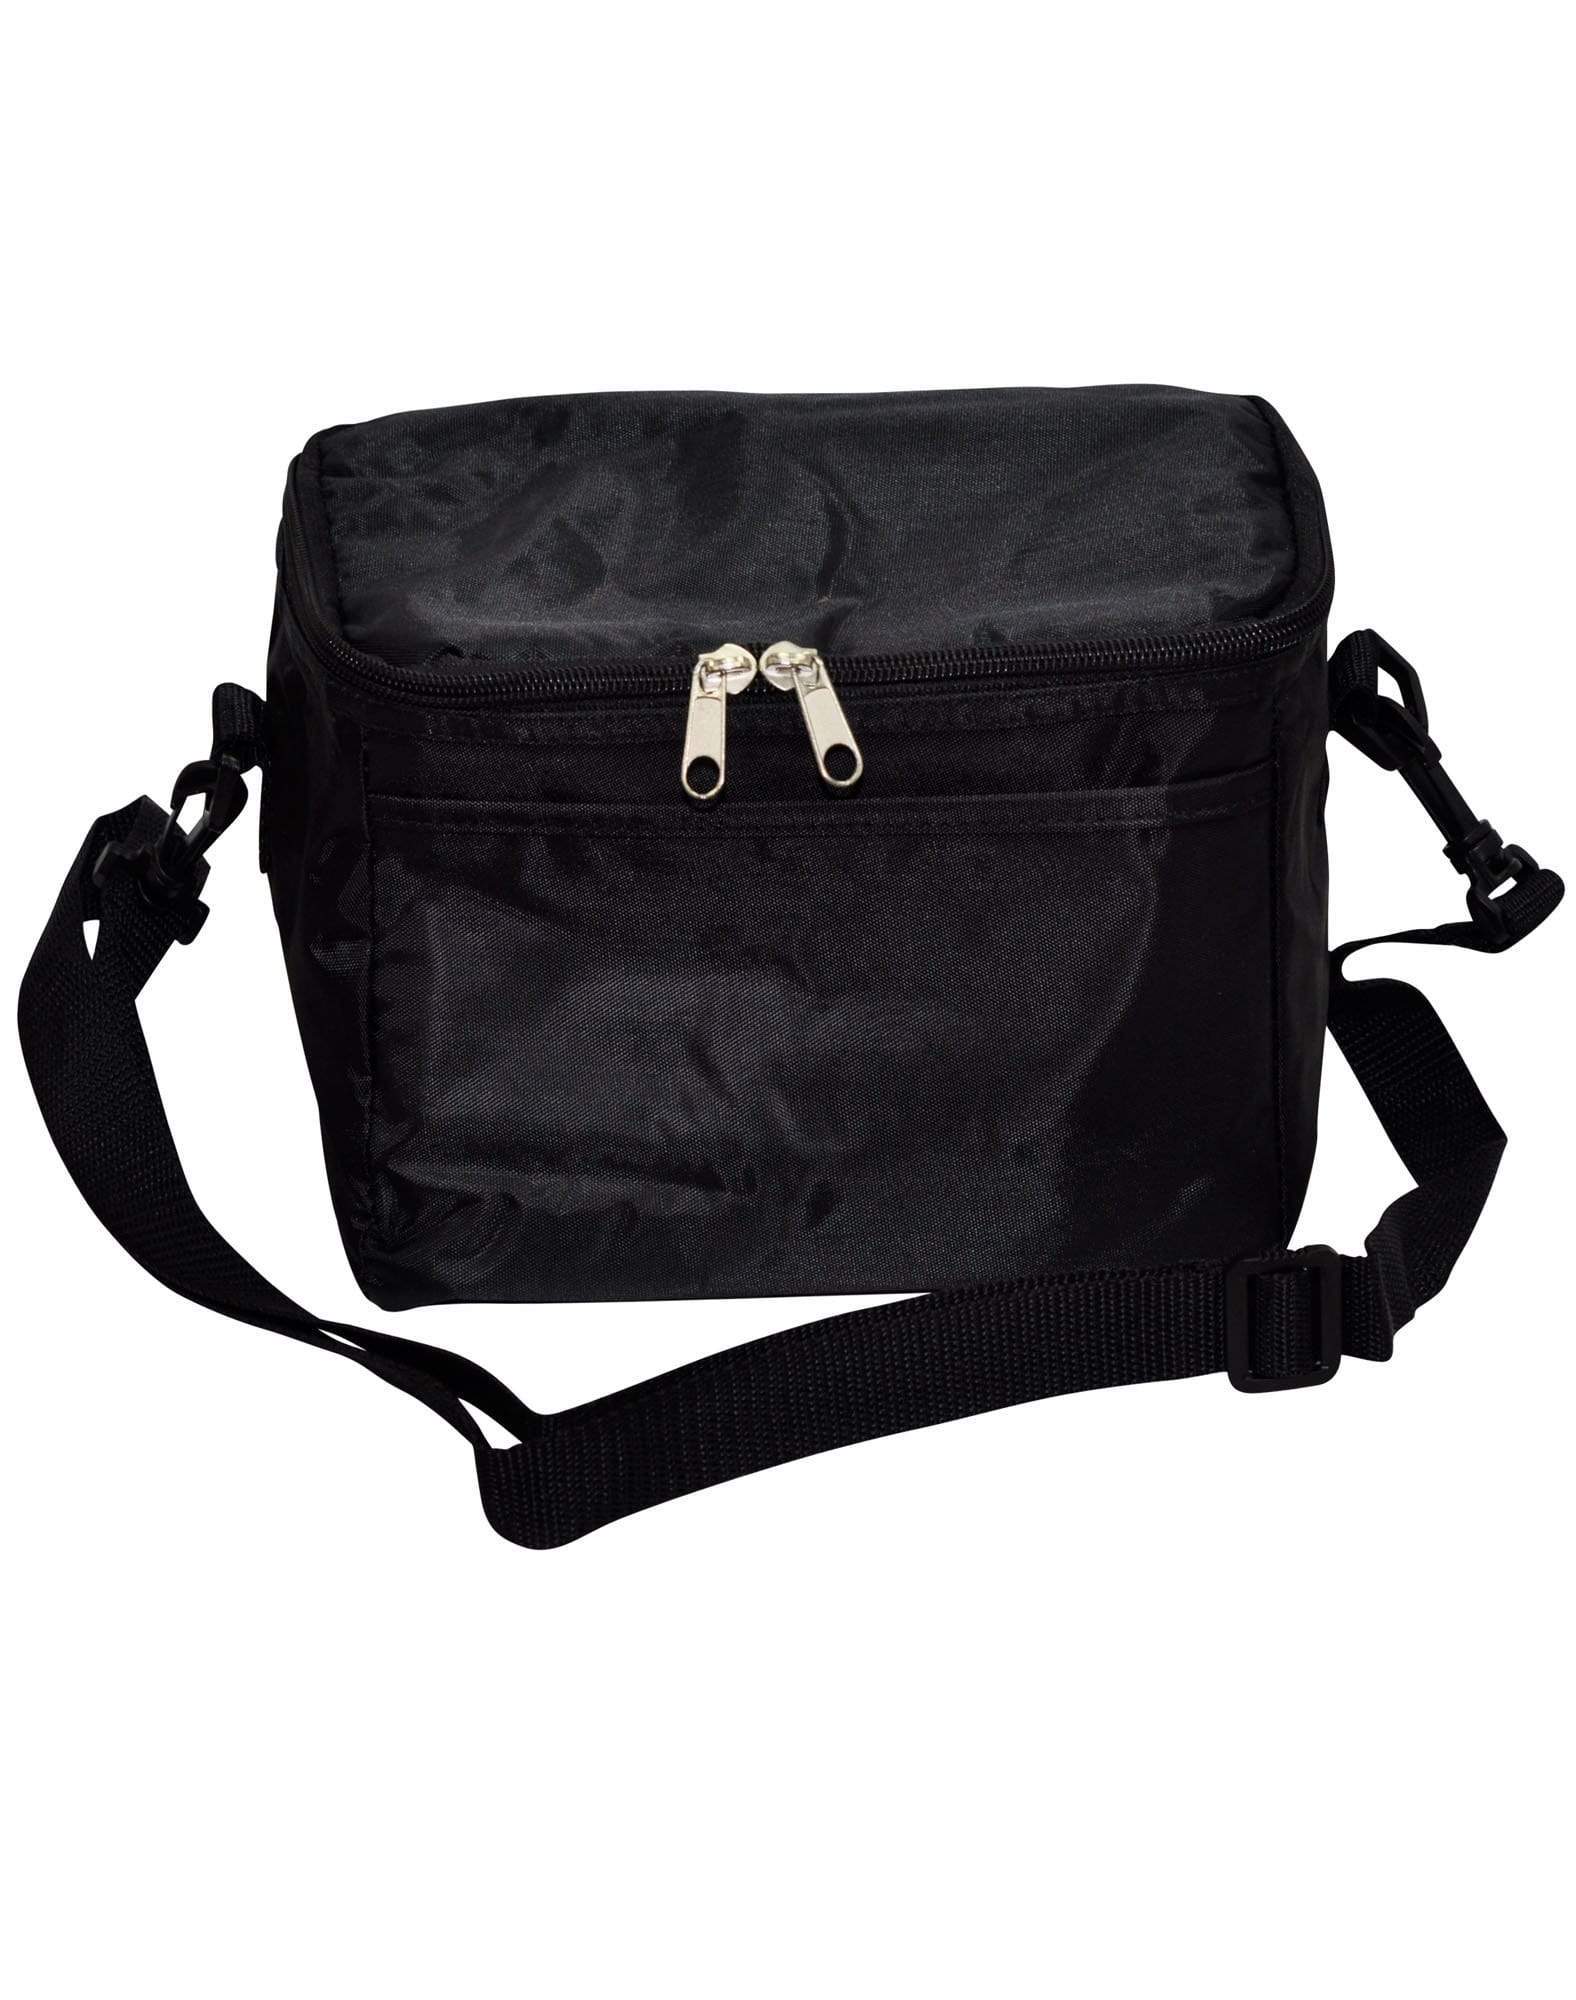 Cooler Bag - 6 Can Cooler Bag B6001 Active Wear Winning Spirit Black "(w)21cm x (h)16cm x (d)14cm, Capacity: 375ml x 6" 